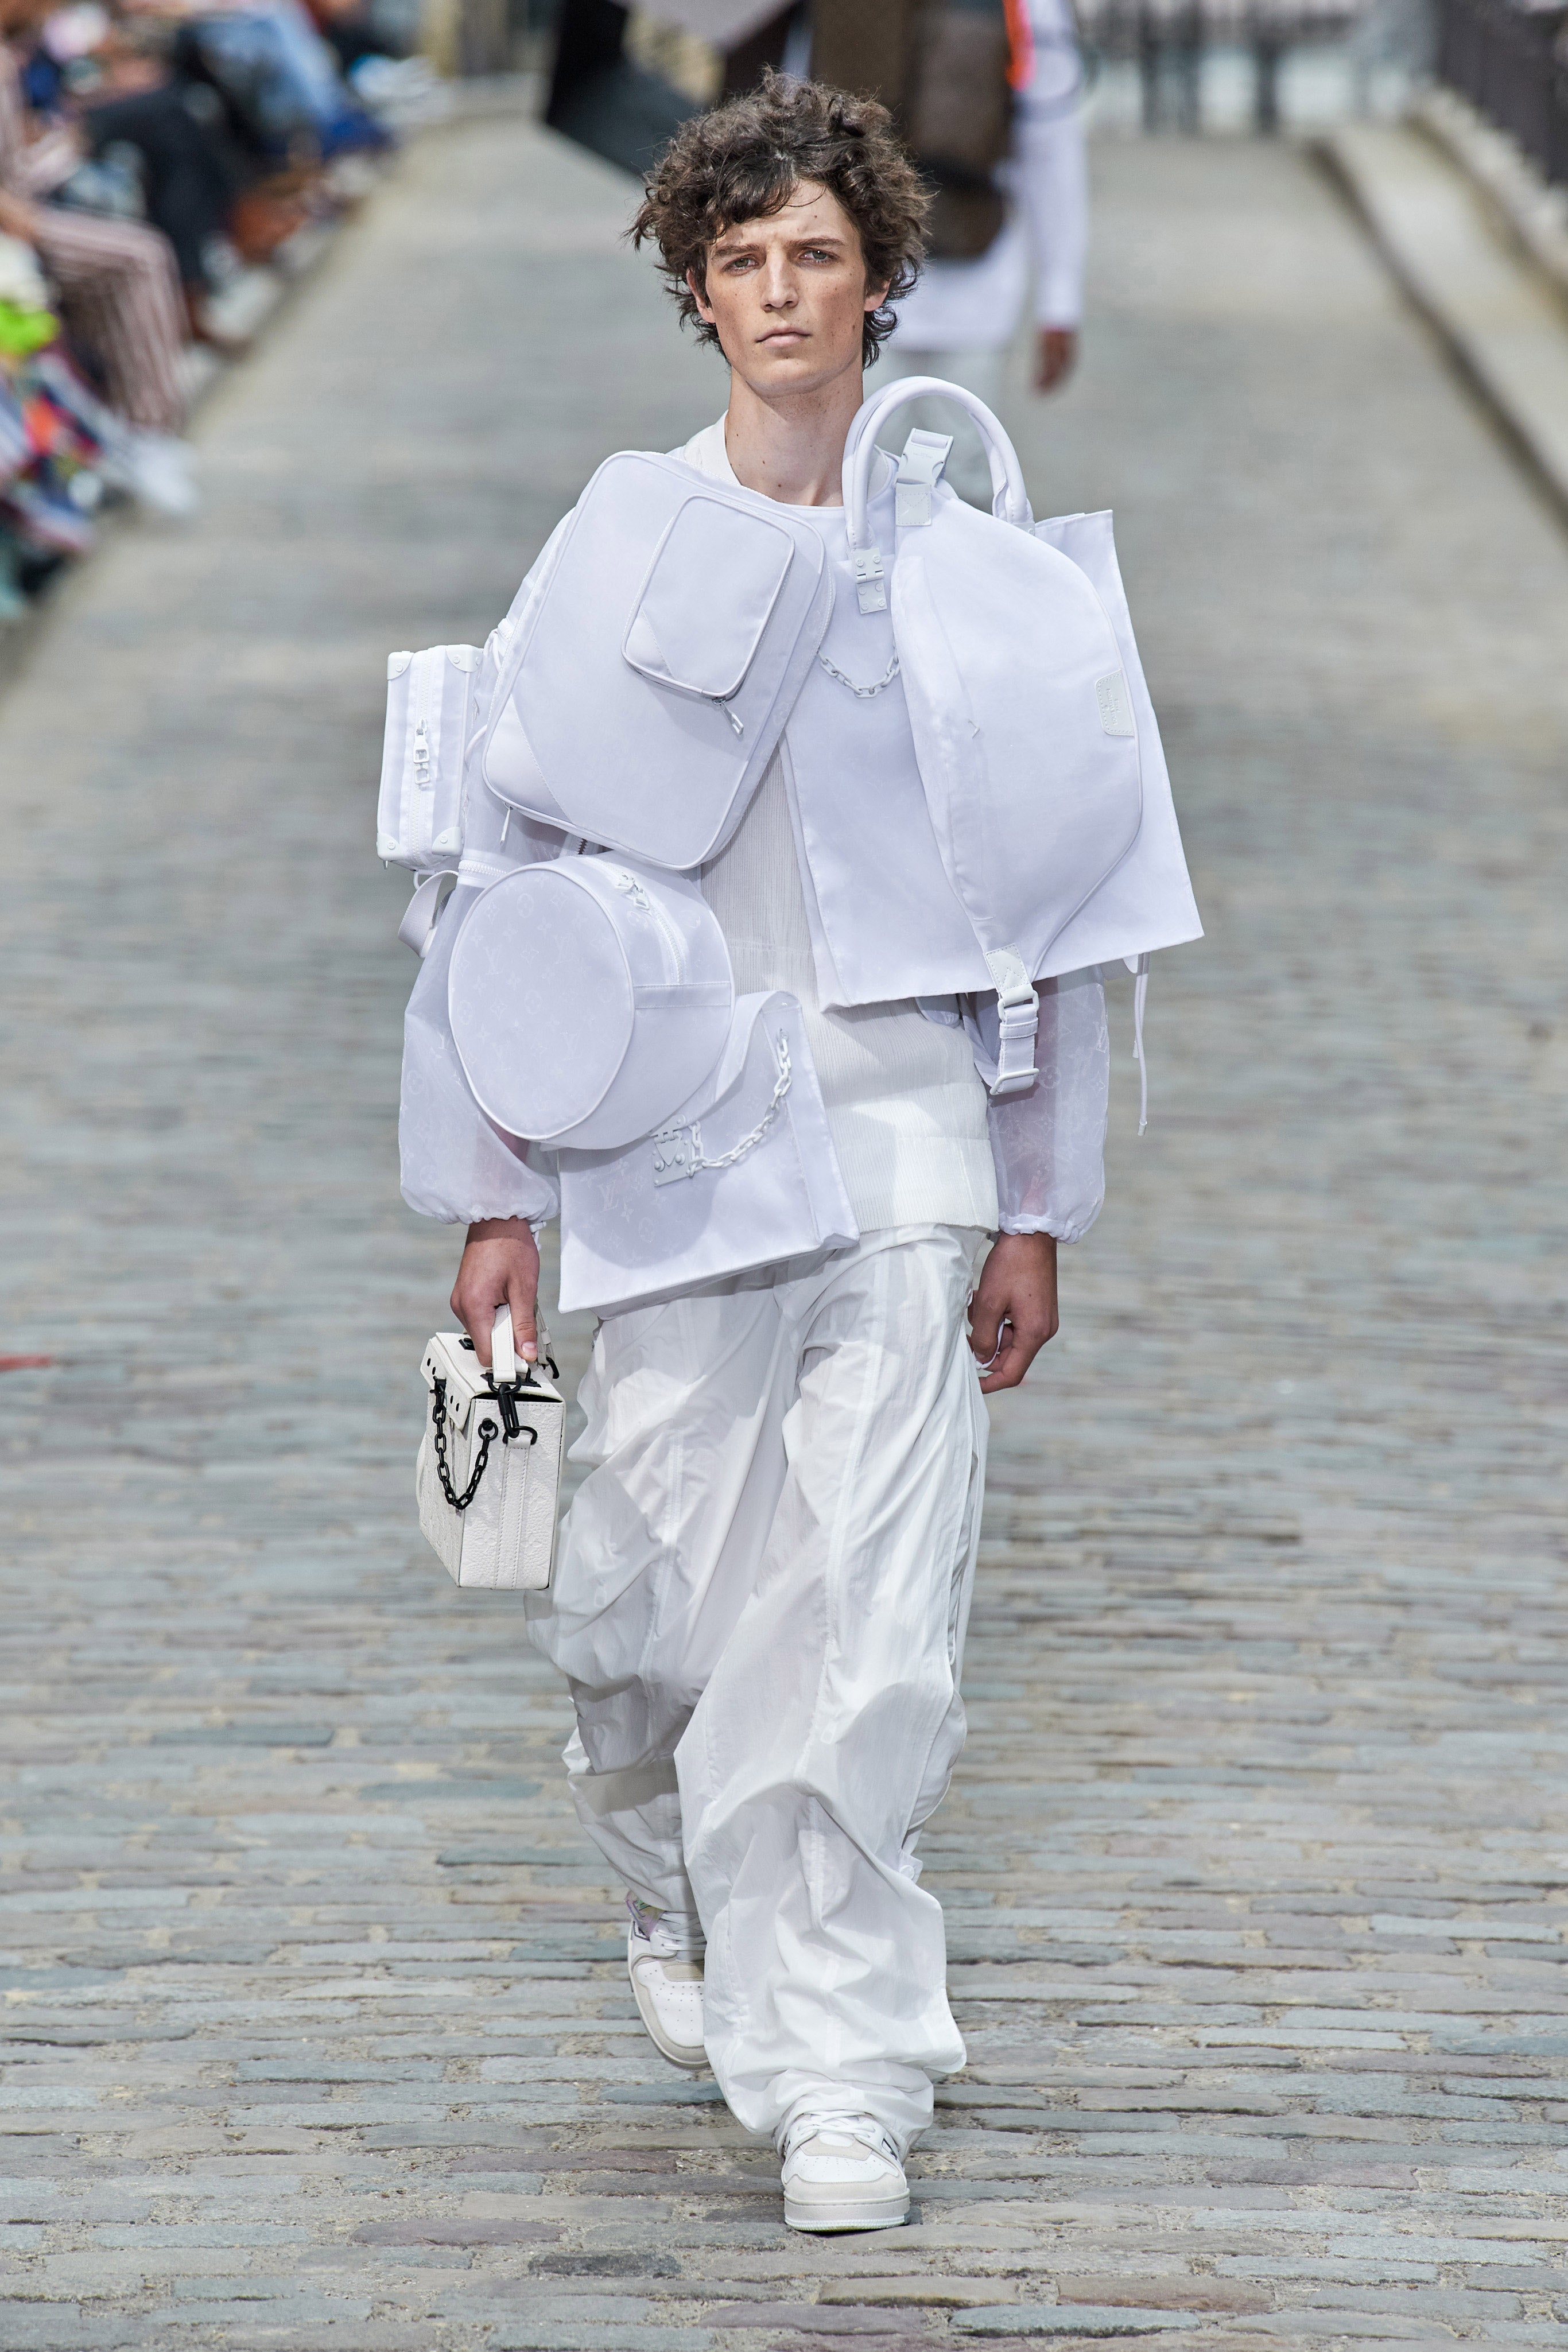 Louis Vuitton's Spring 2020 menswear campaign explores the beauty